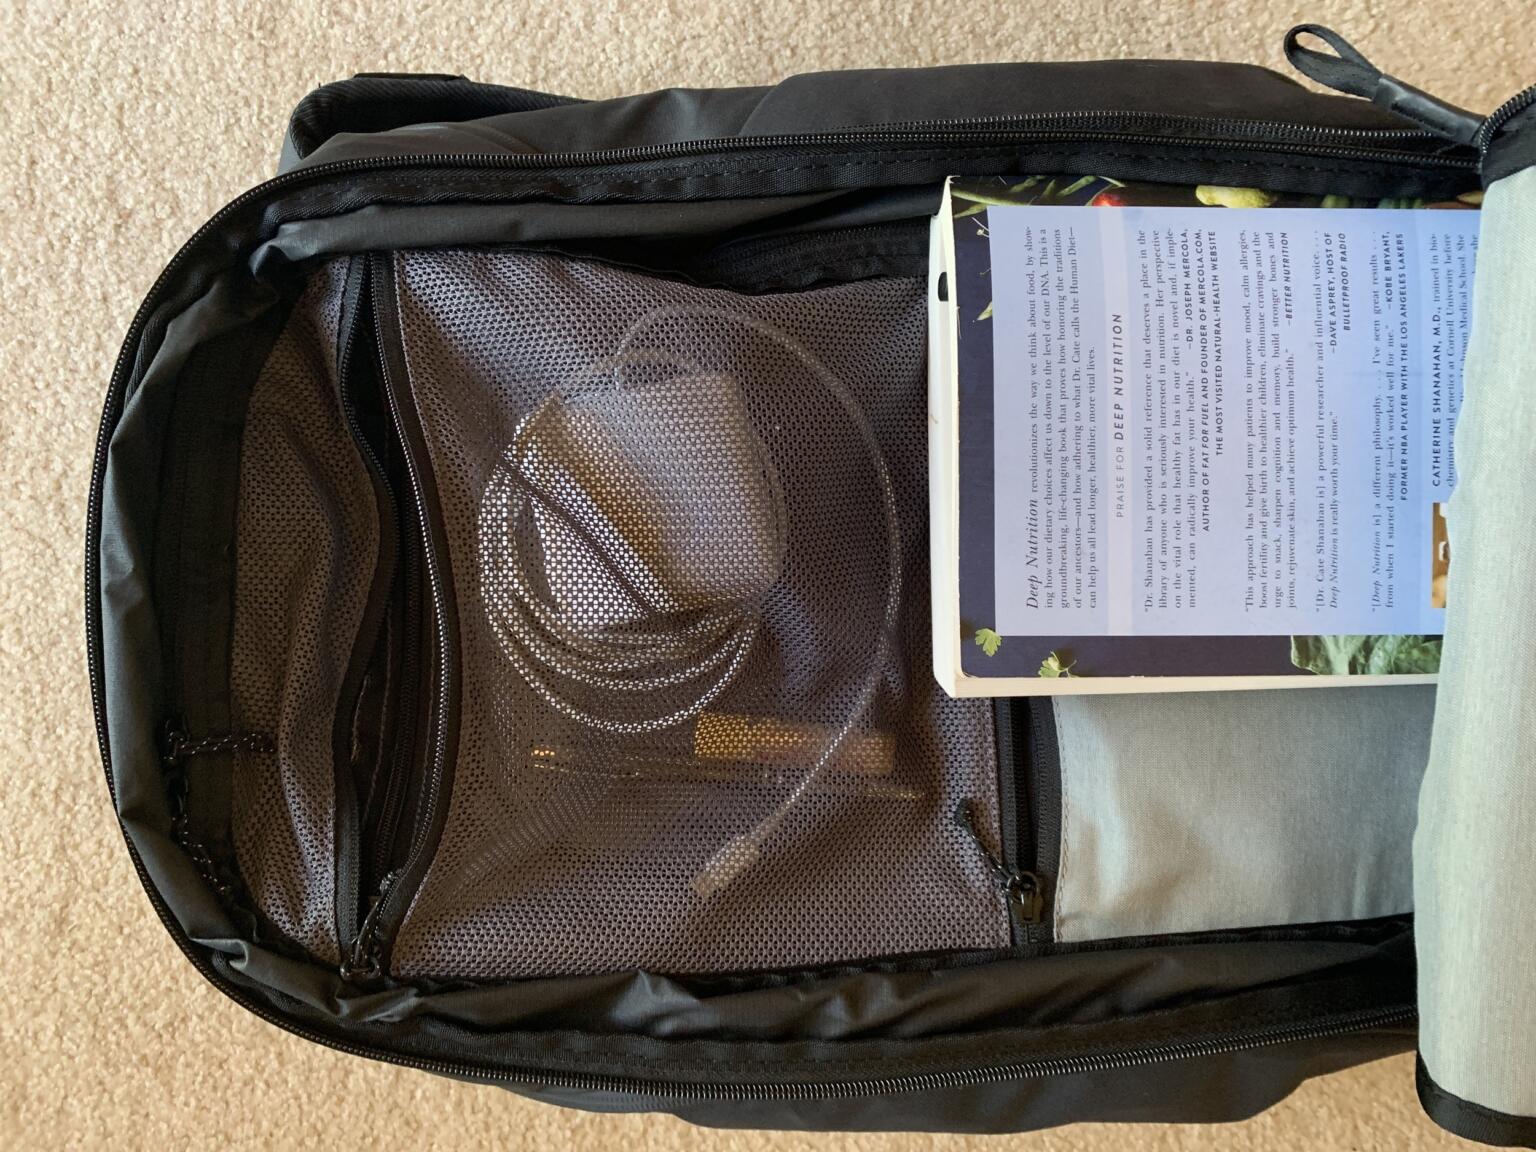 Peak Design travel backpack review